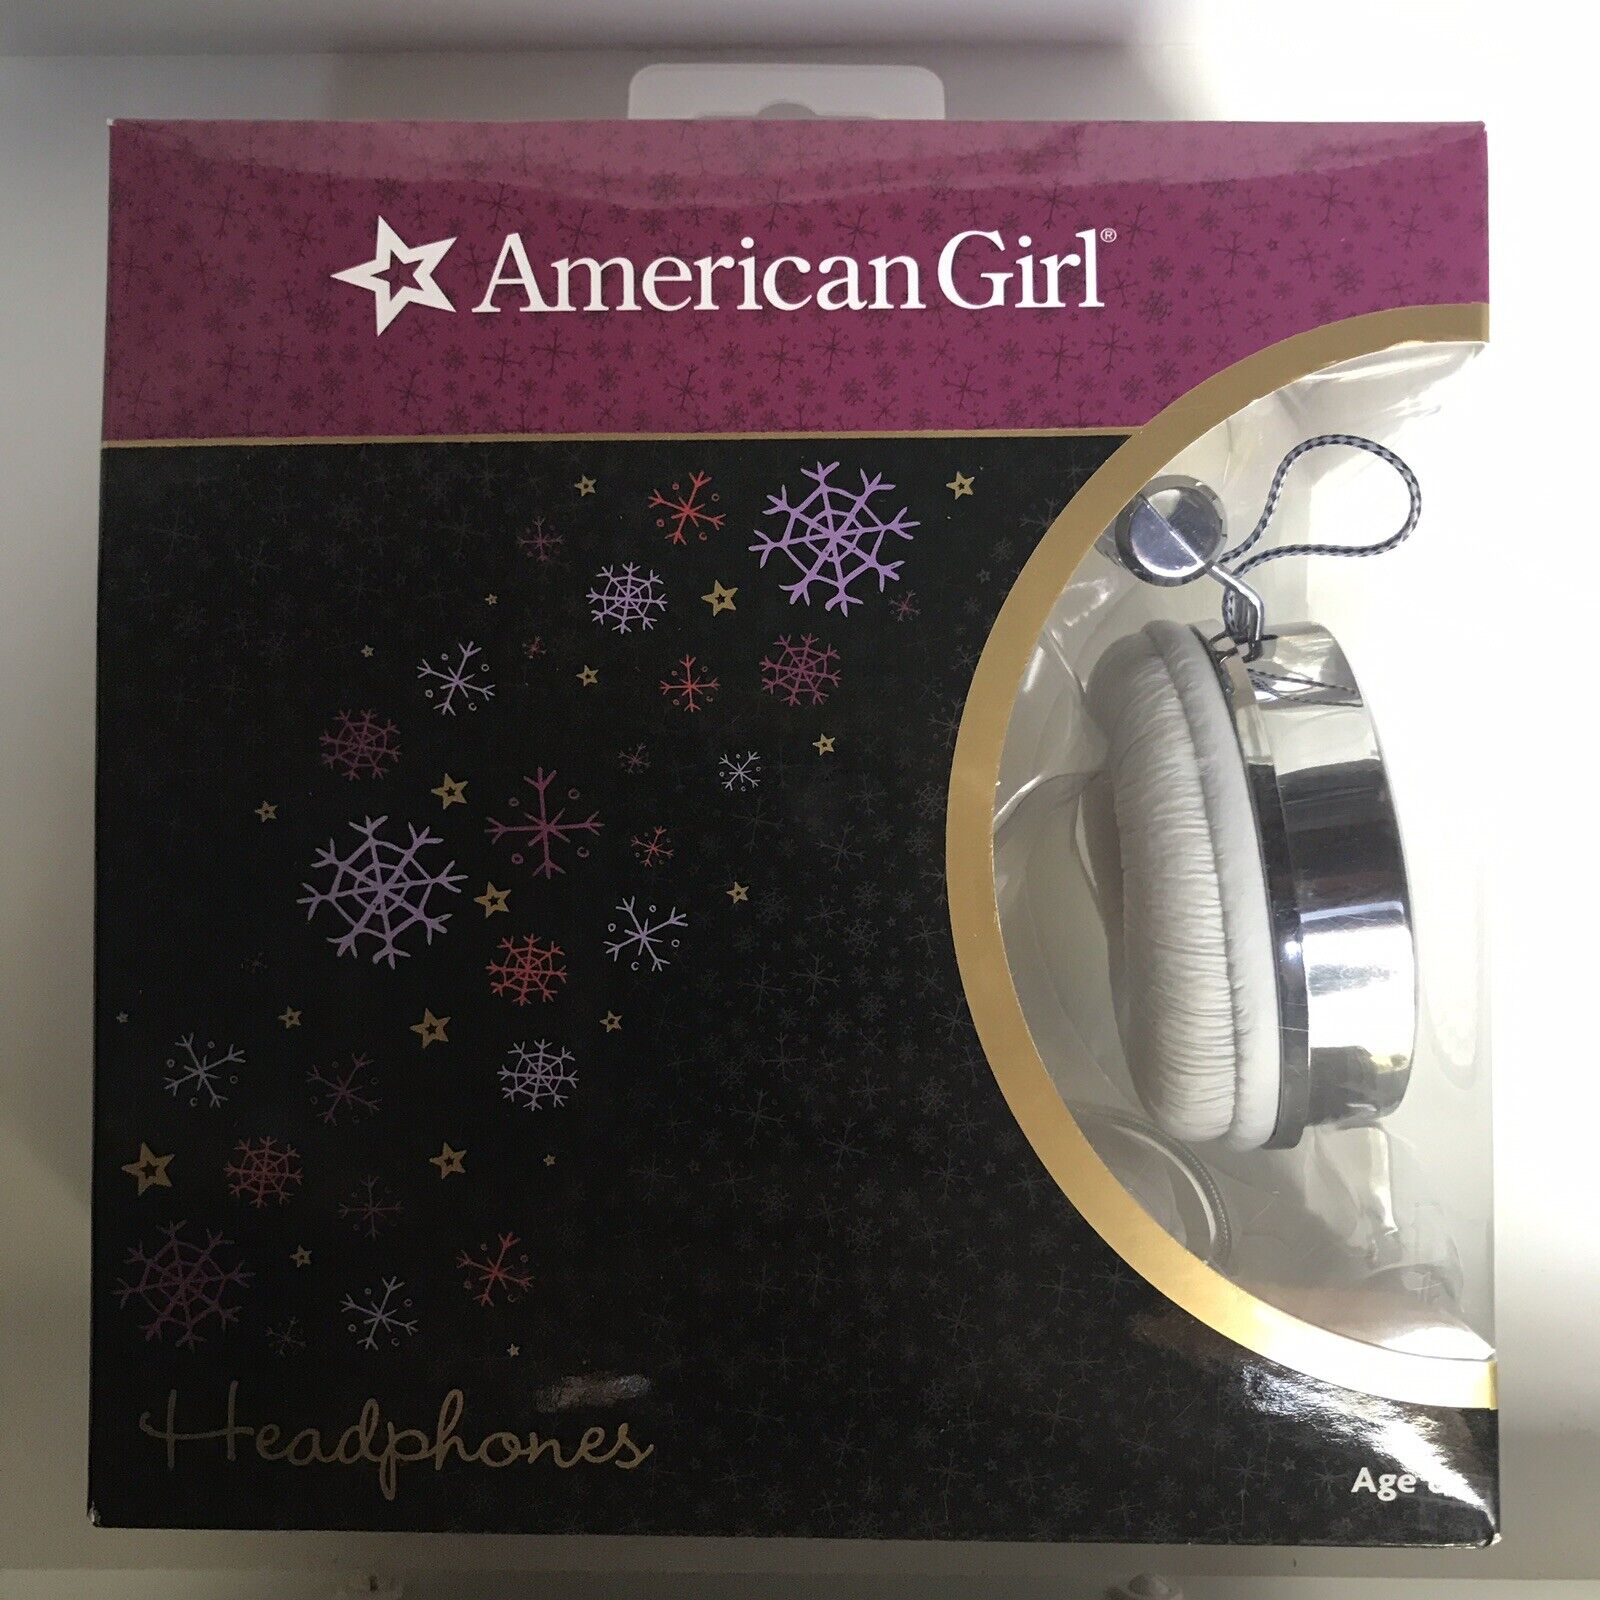 American Girl Accessories Fashion Angels Headphones IPad IPhone MP3 Mac/PC 2016